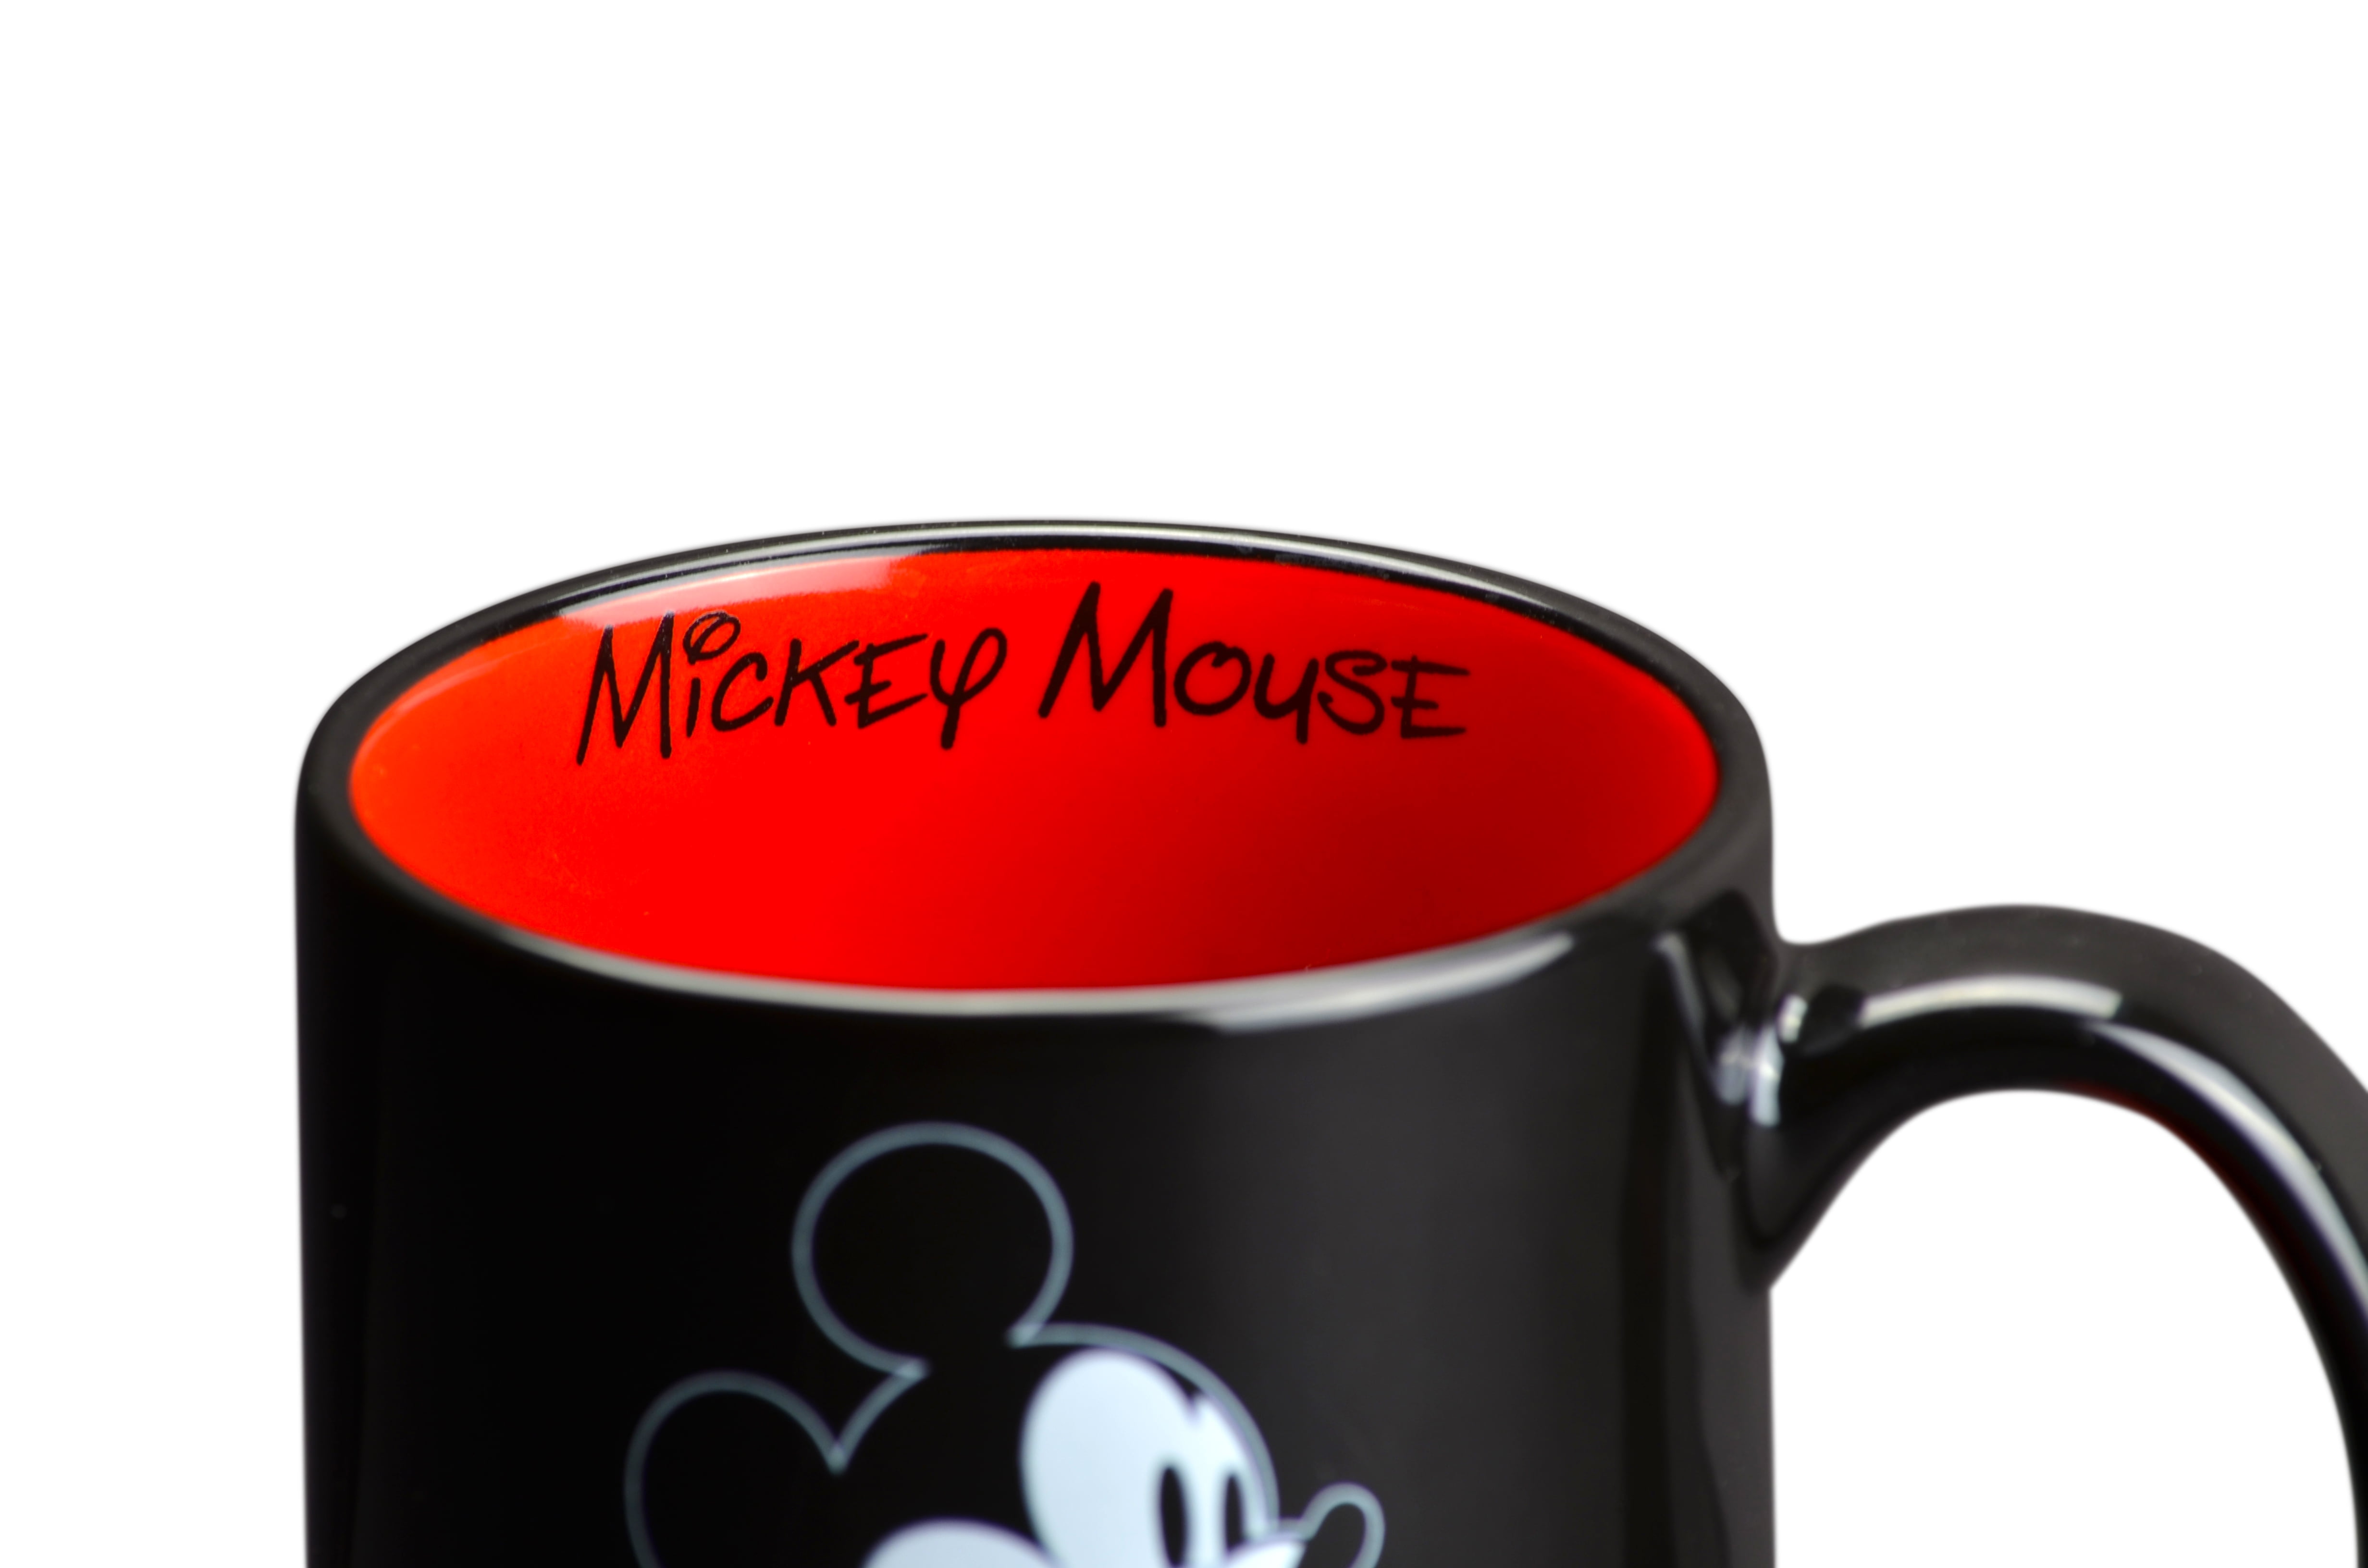  Mickey & Friends Glass Top Mug Warmer with 16 Ounce Mug: Home &  Kitchen